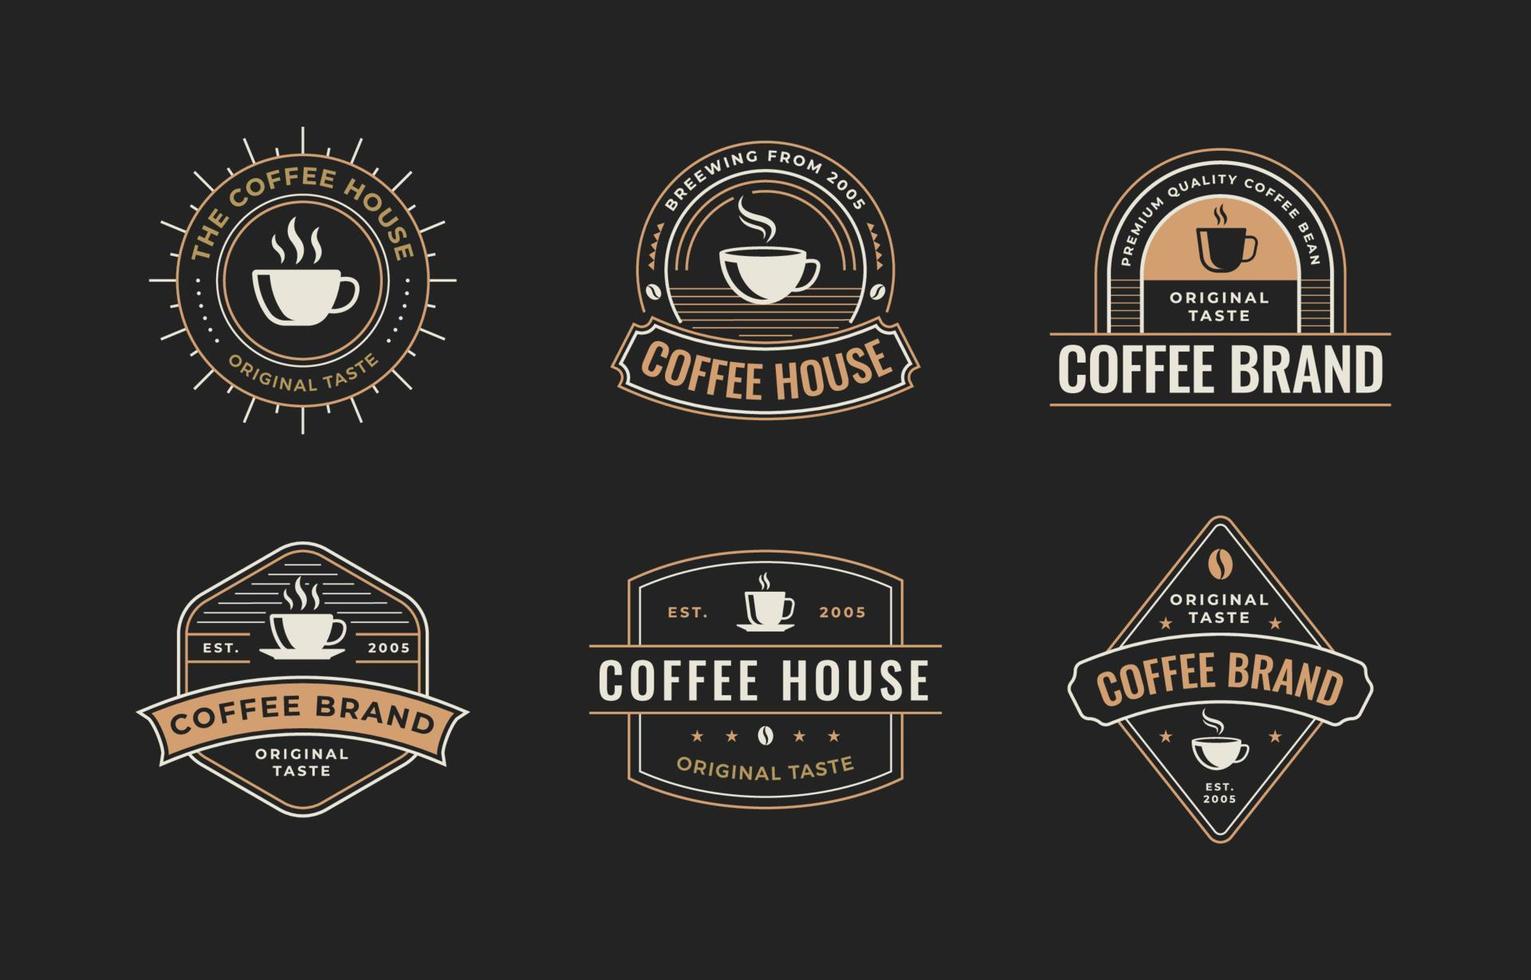 Vintage-Kaffee-Logo-Set vektor